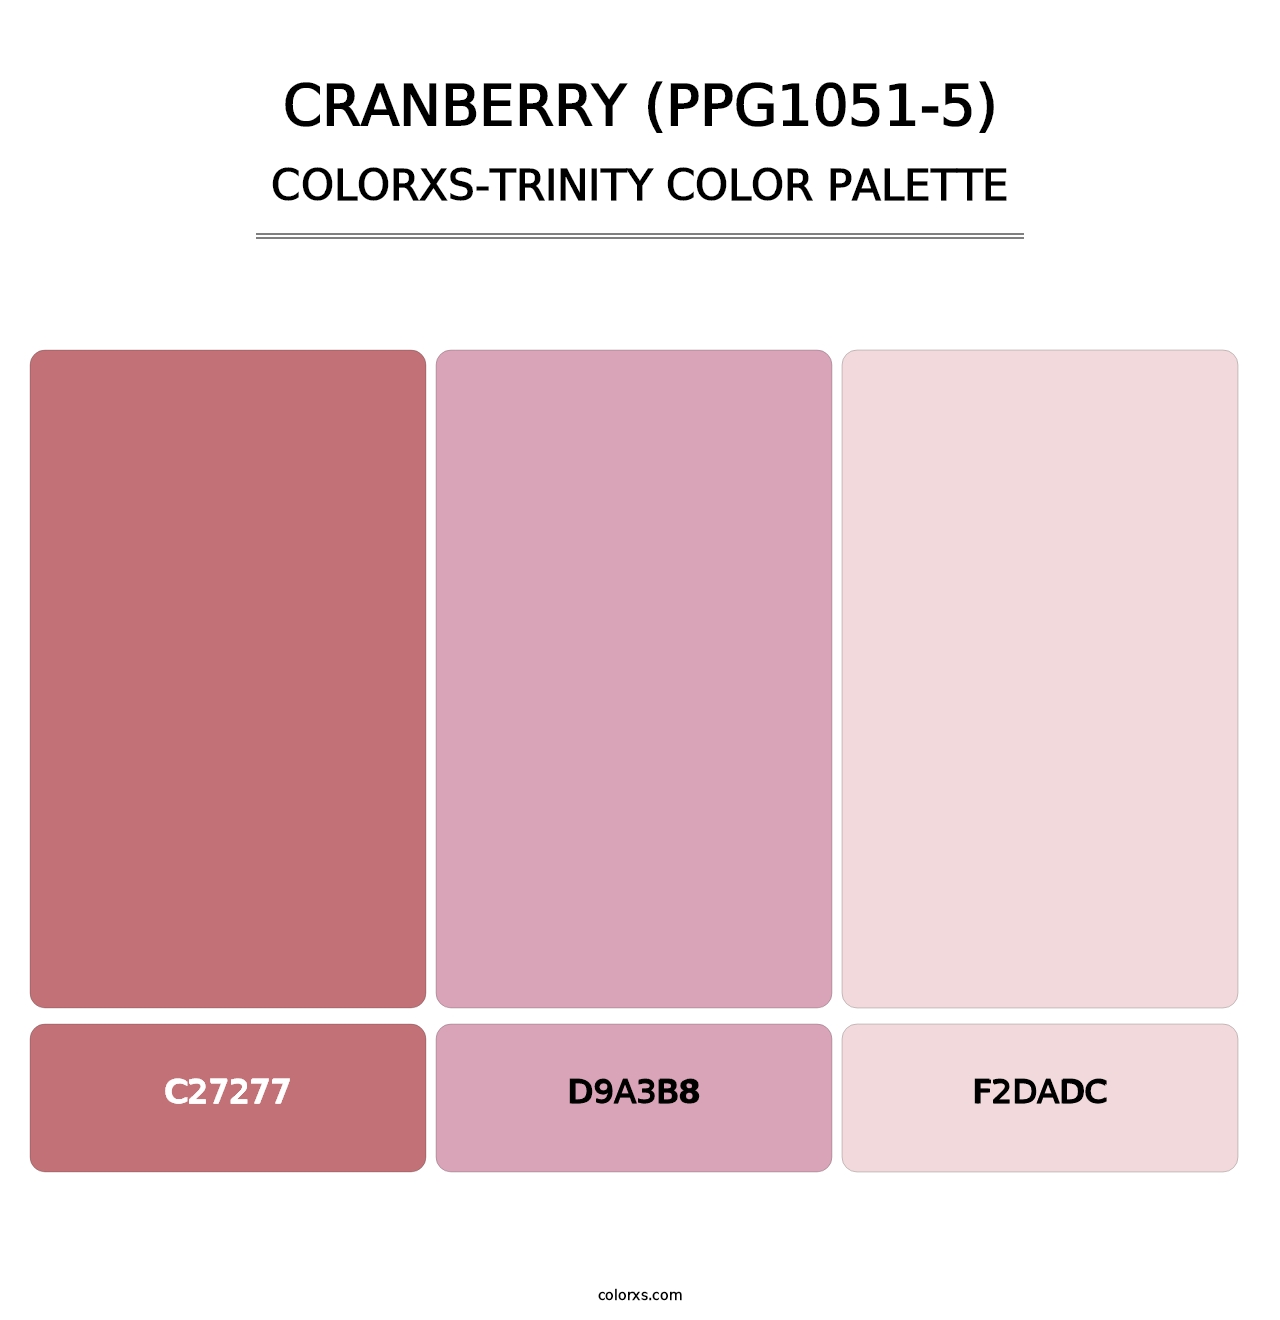 Cranberry (PPG1051-5) - Colorxs Trinity Palette